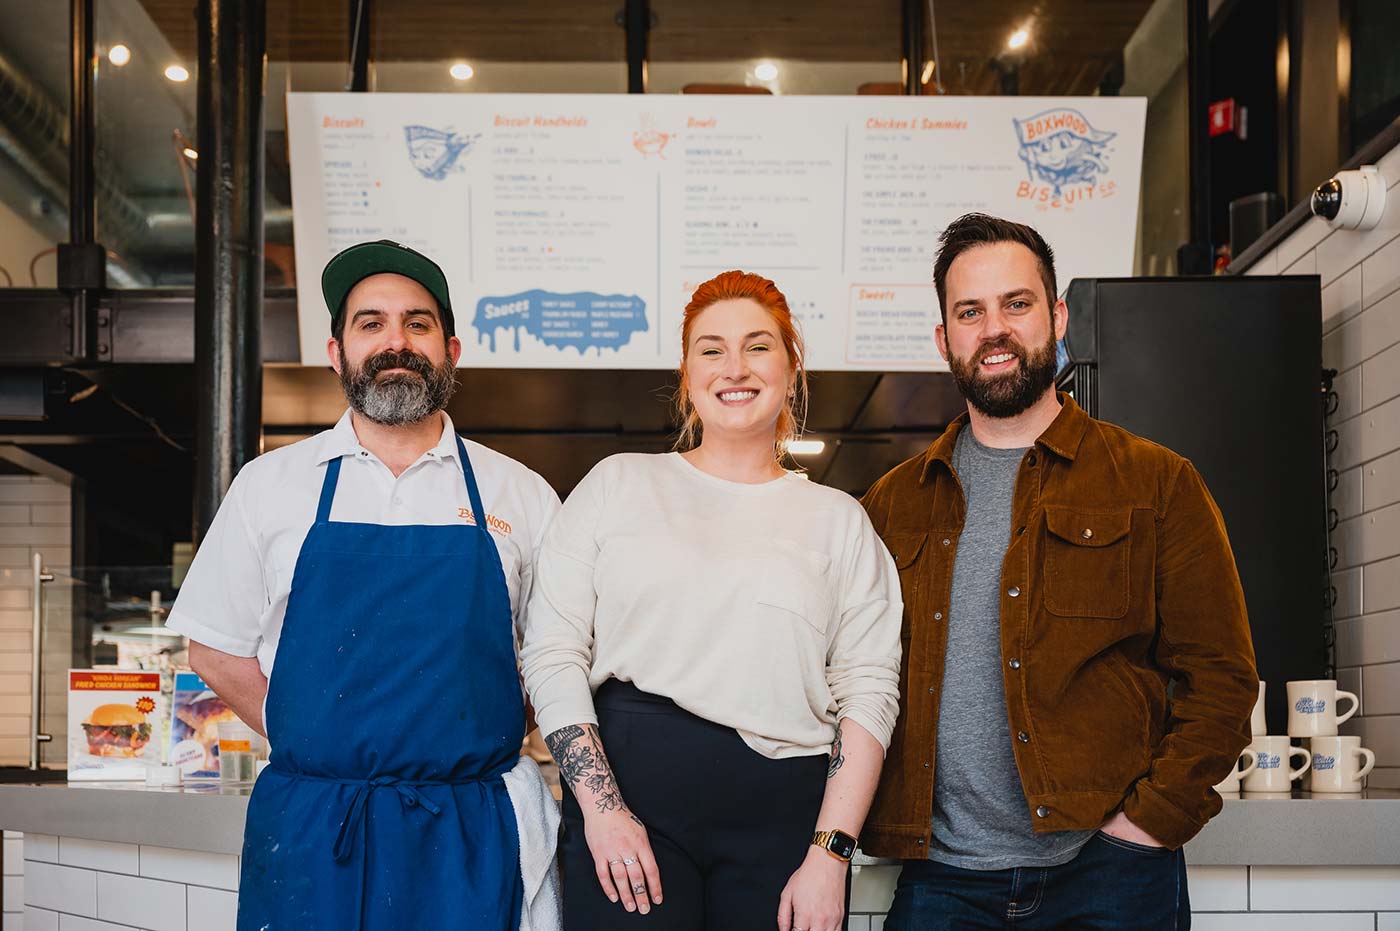 The Boxwood entrepreneurs: From left, Tyler Minnis, Annie Pierce and Luke Pierce